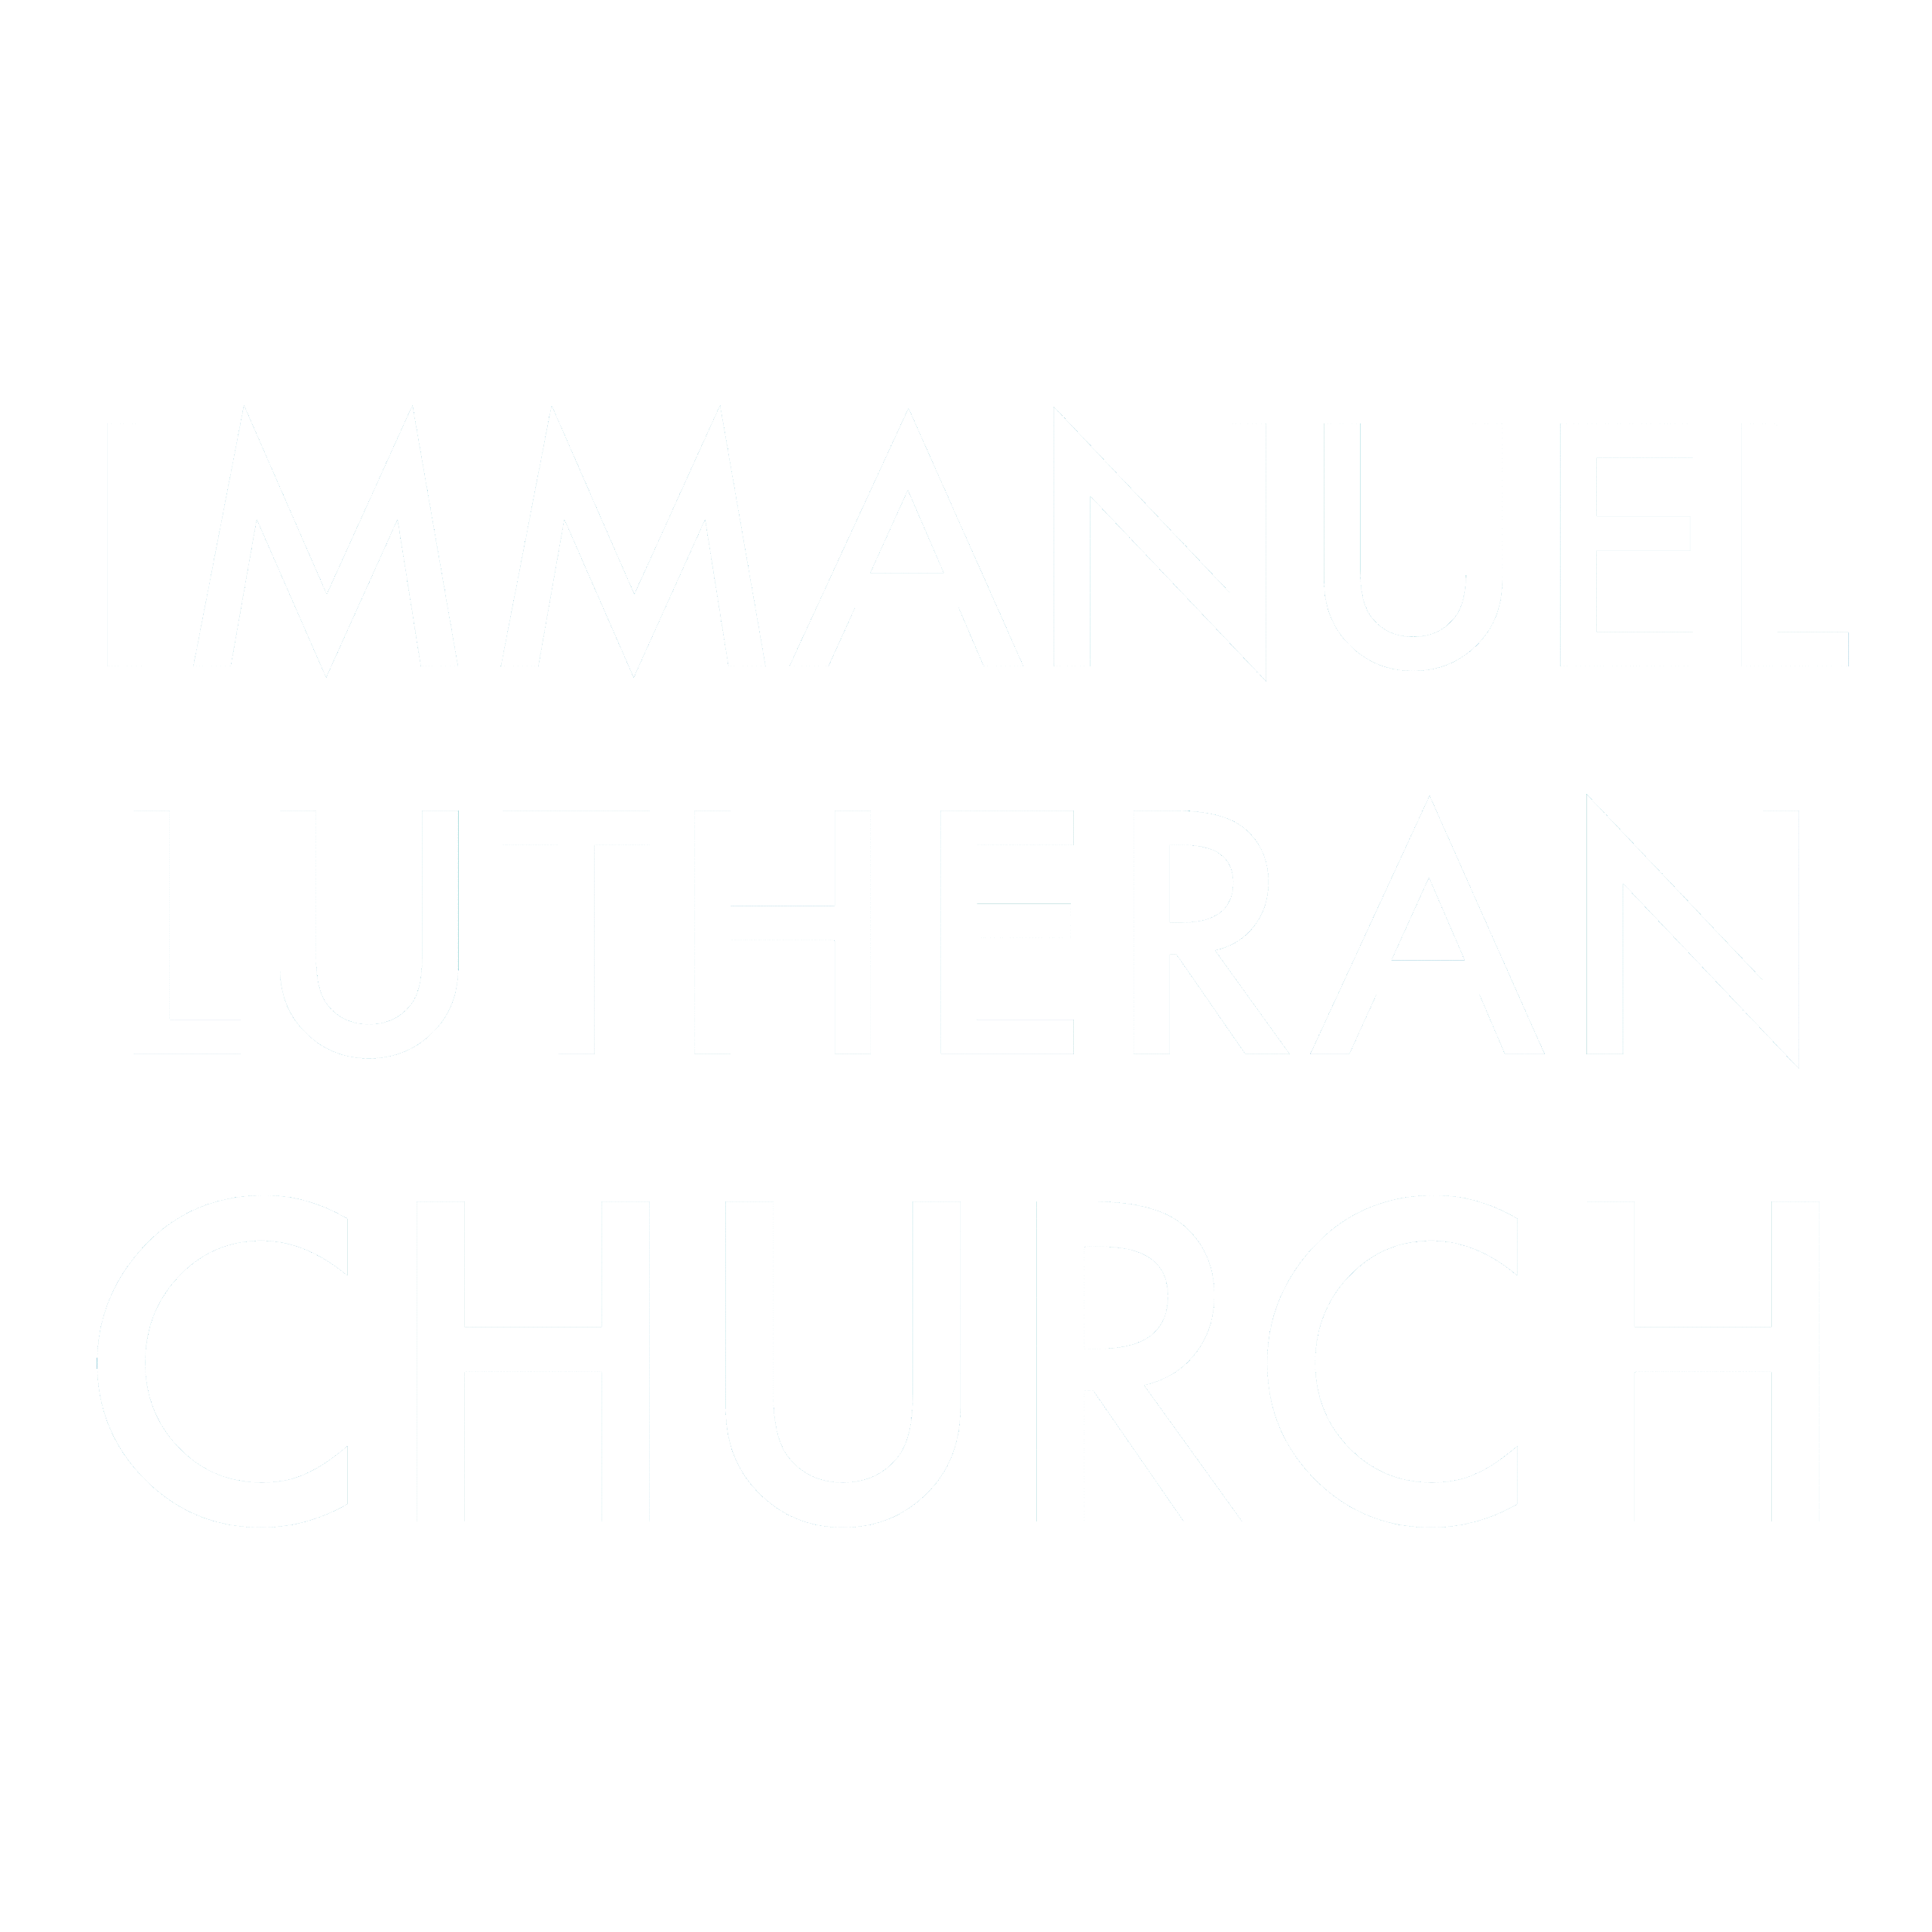 IMMANUEL LUTHERAN CHURCH